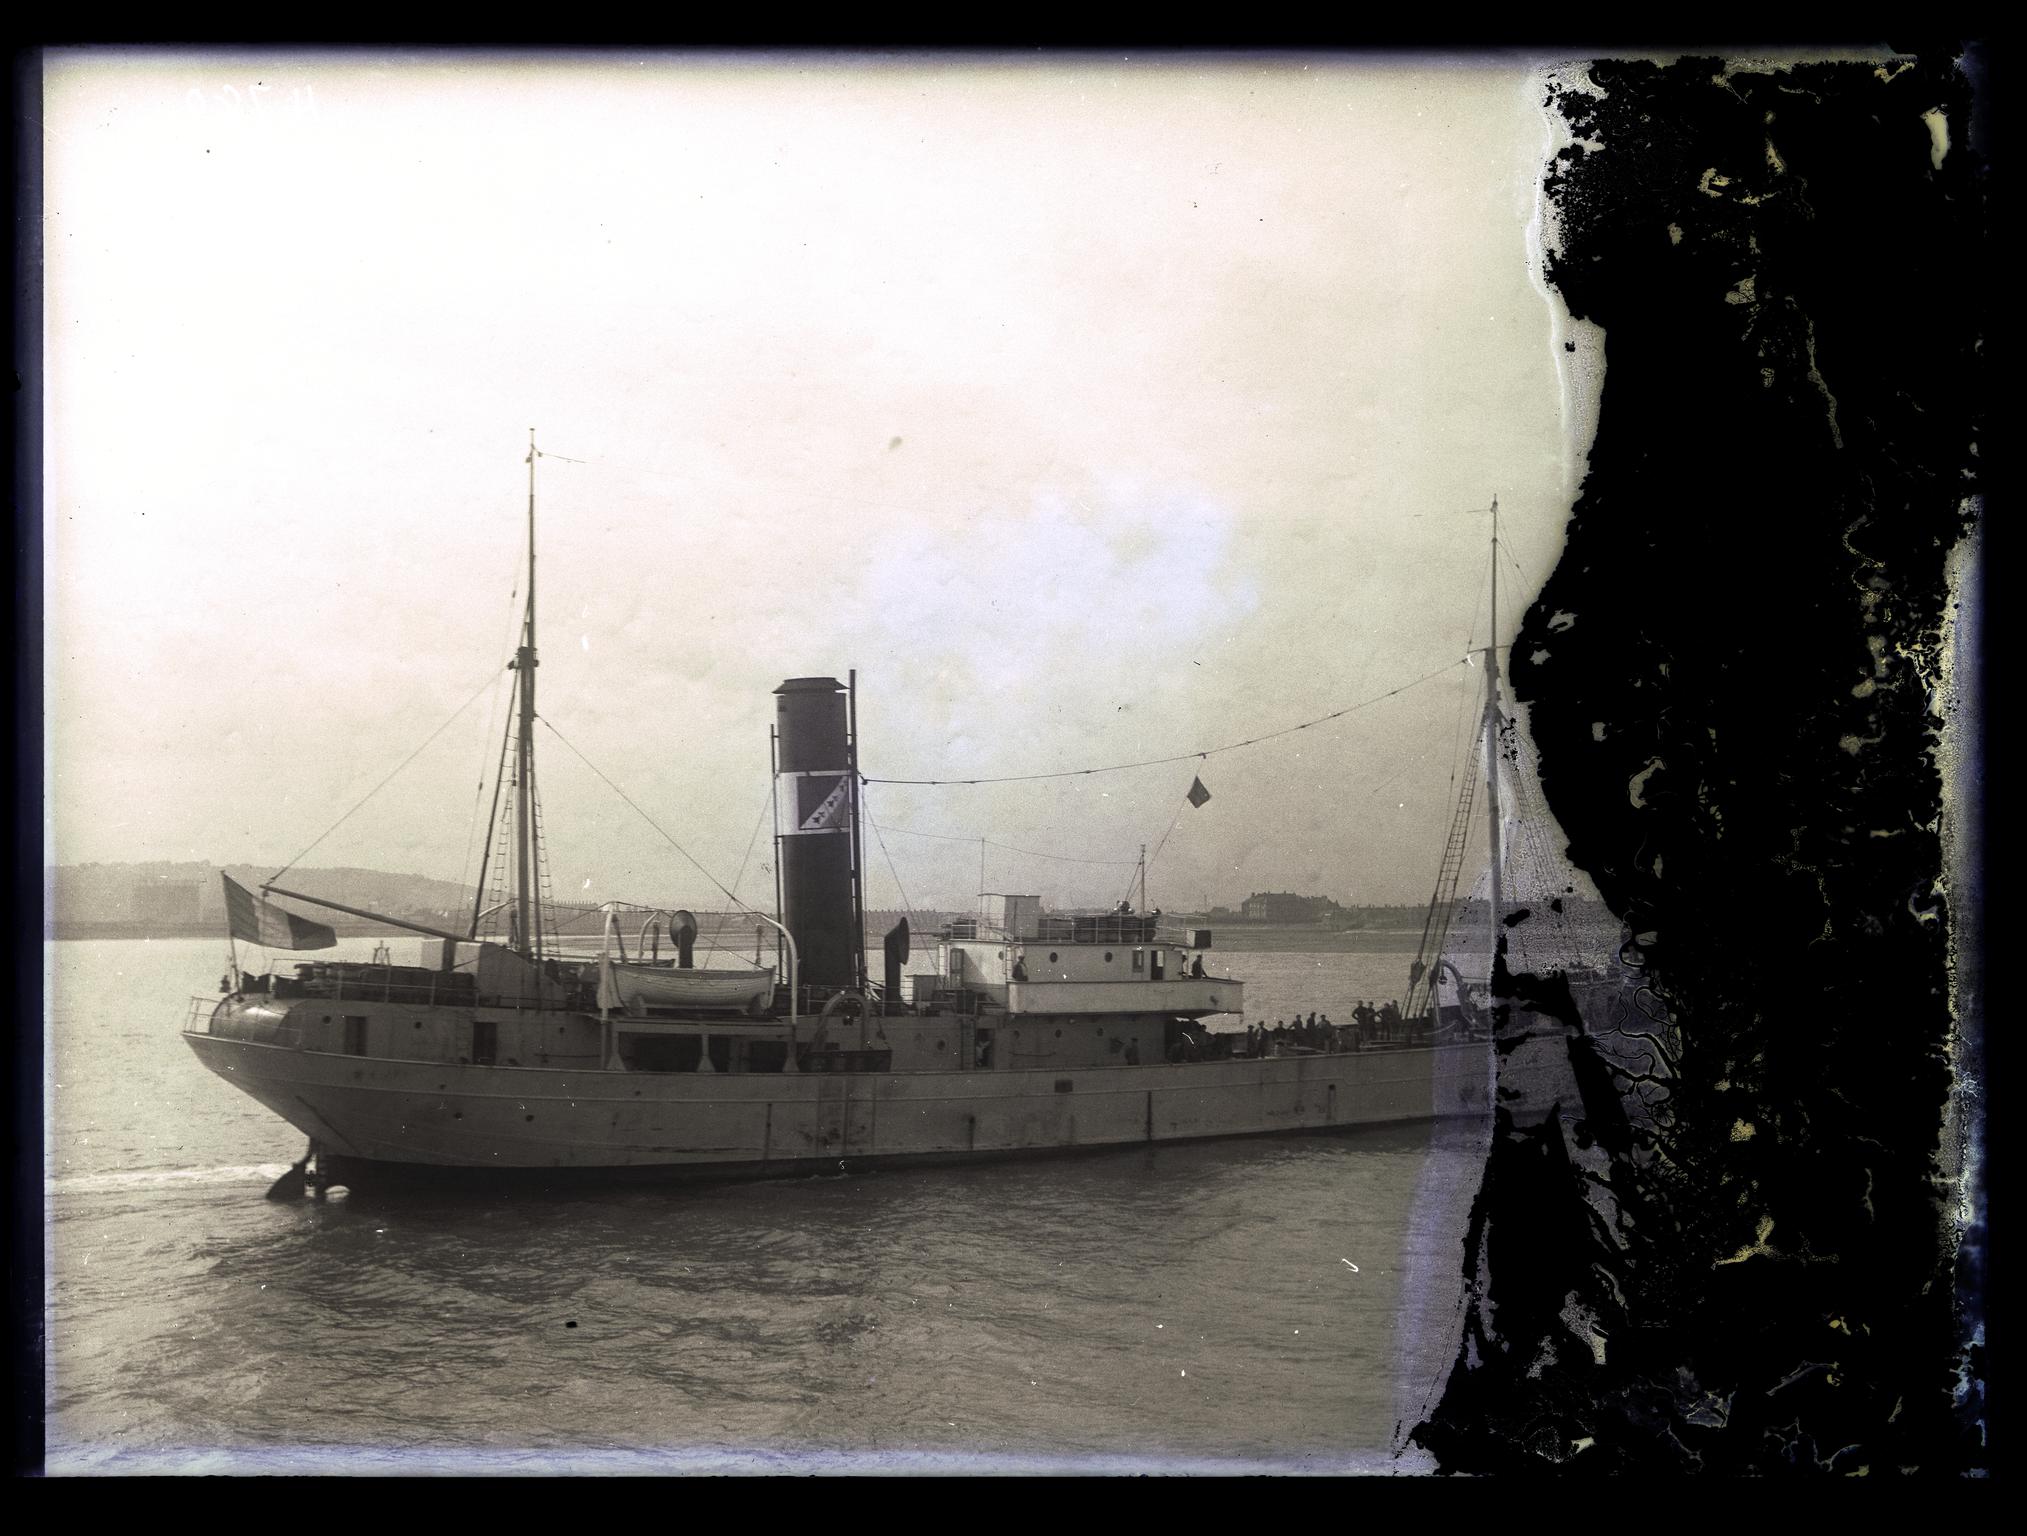 ALFRED (trawler), glass negative